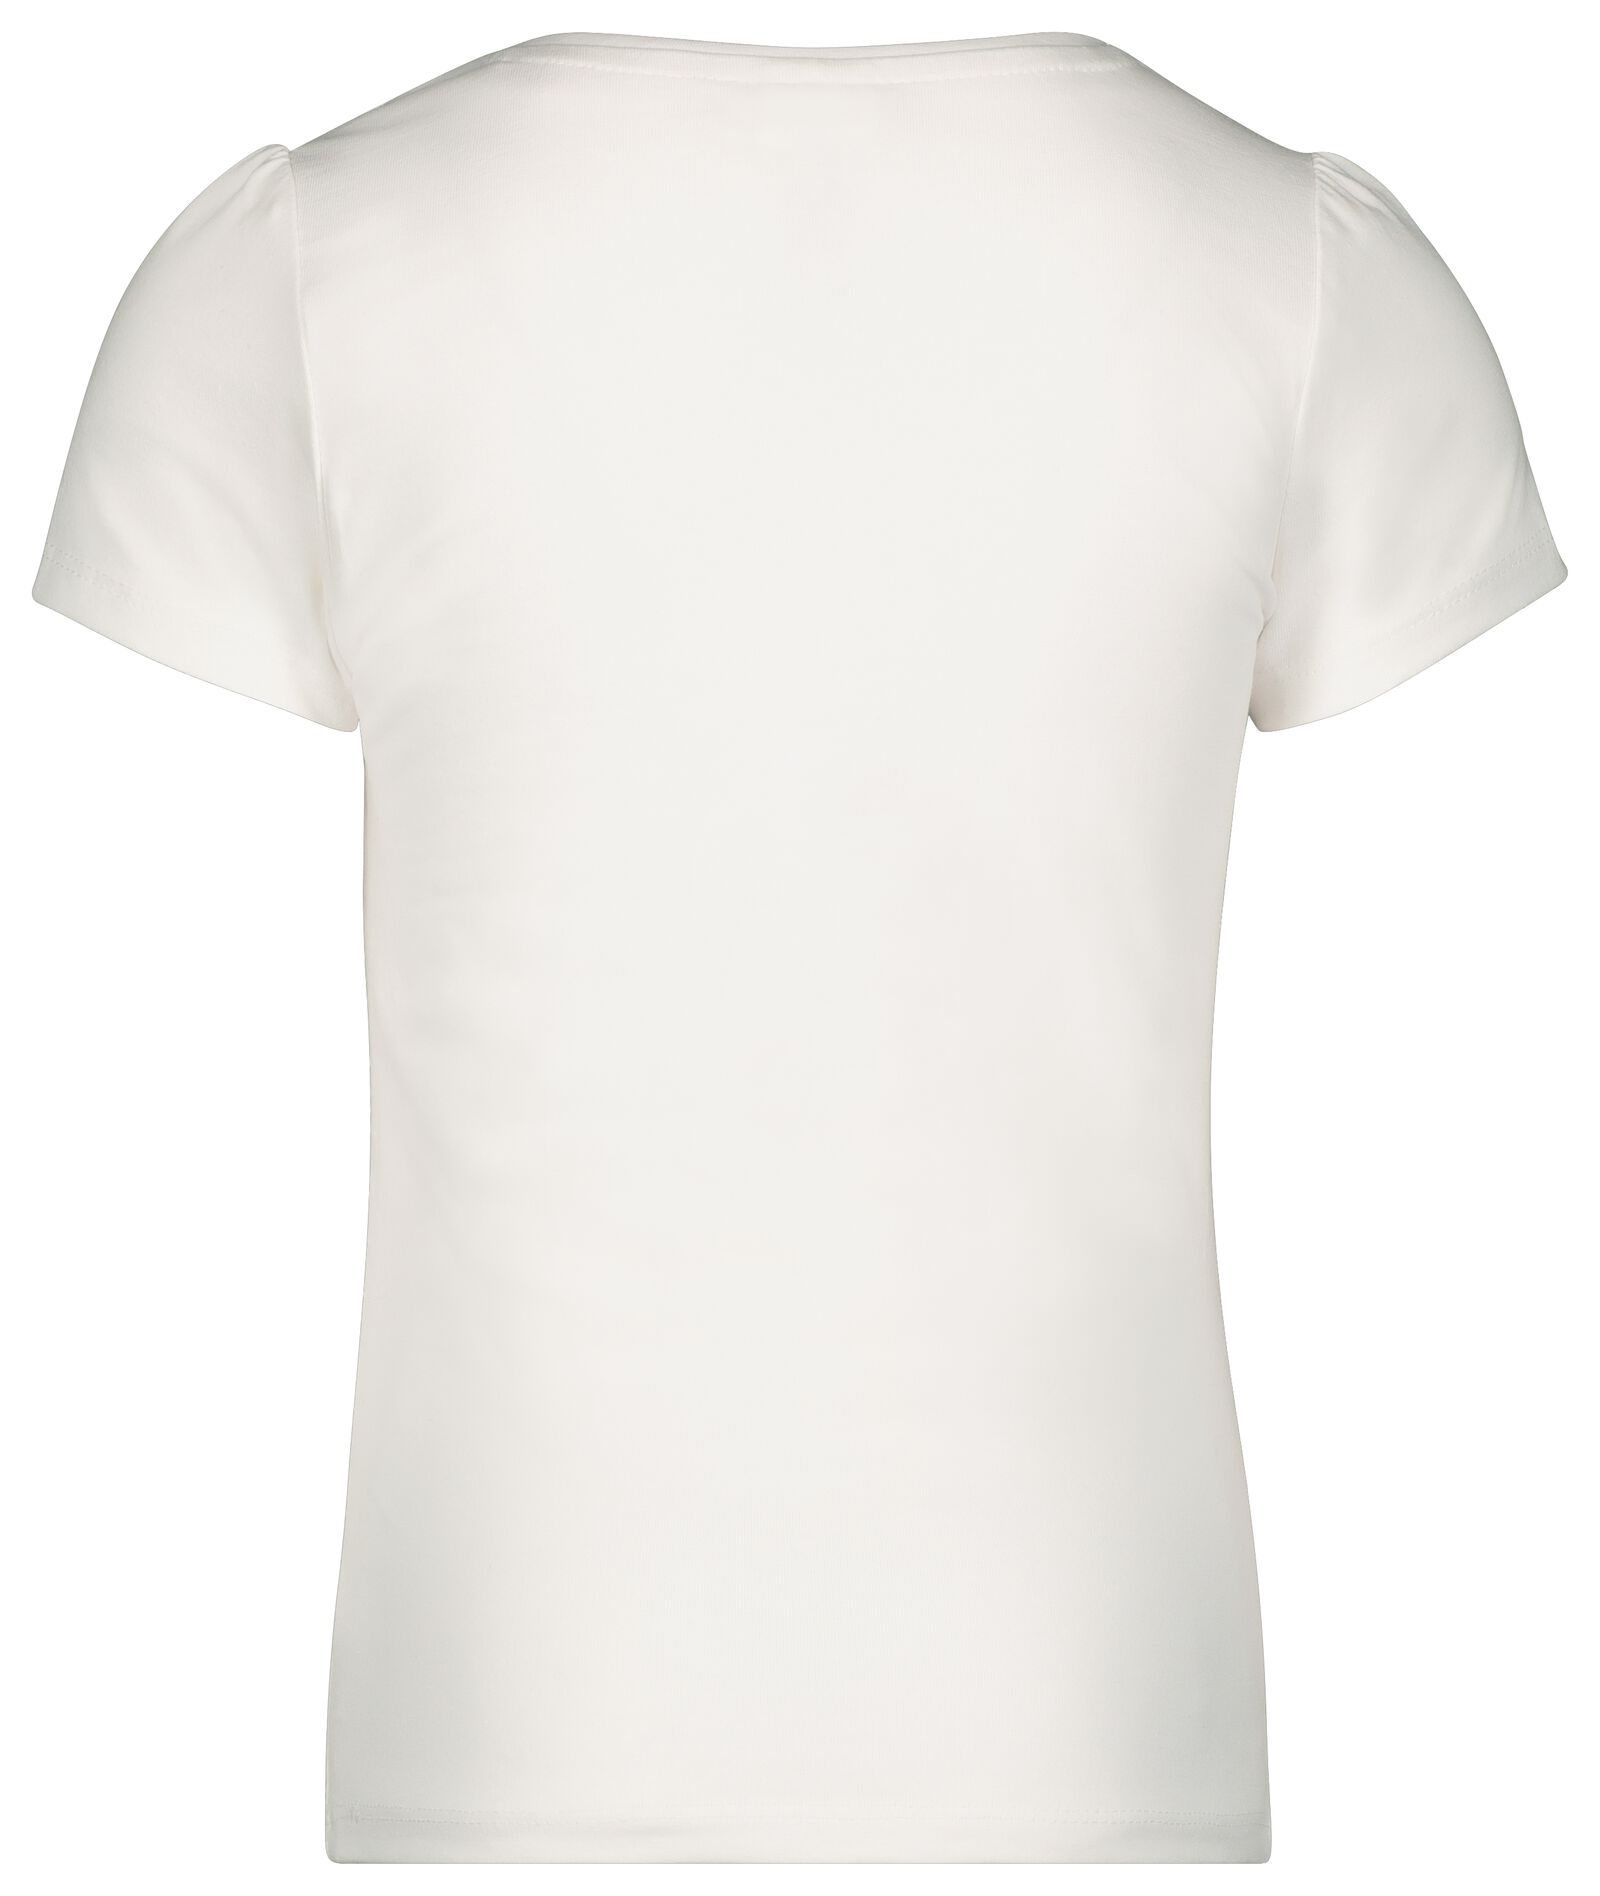 kinder t-shirts - 2 stuks wit 110/116 - 30843932 - HEMA